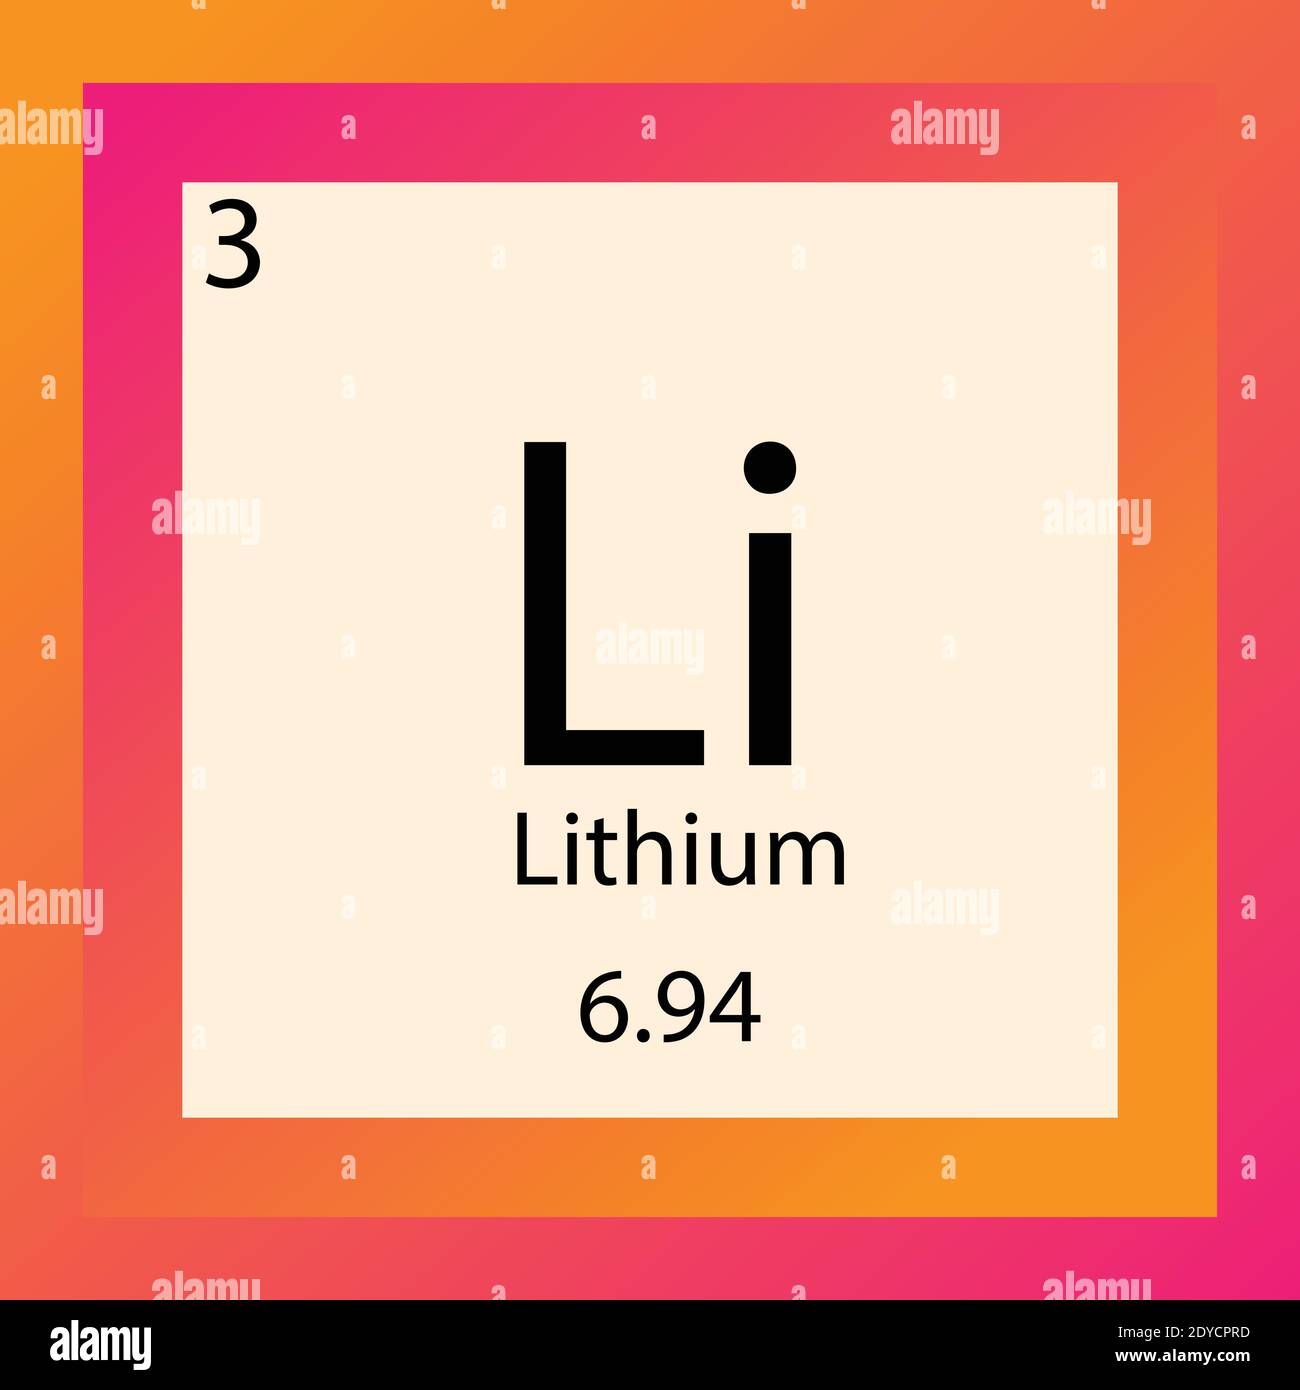 lithium atomic number